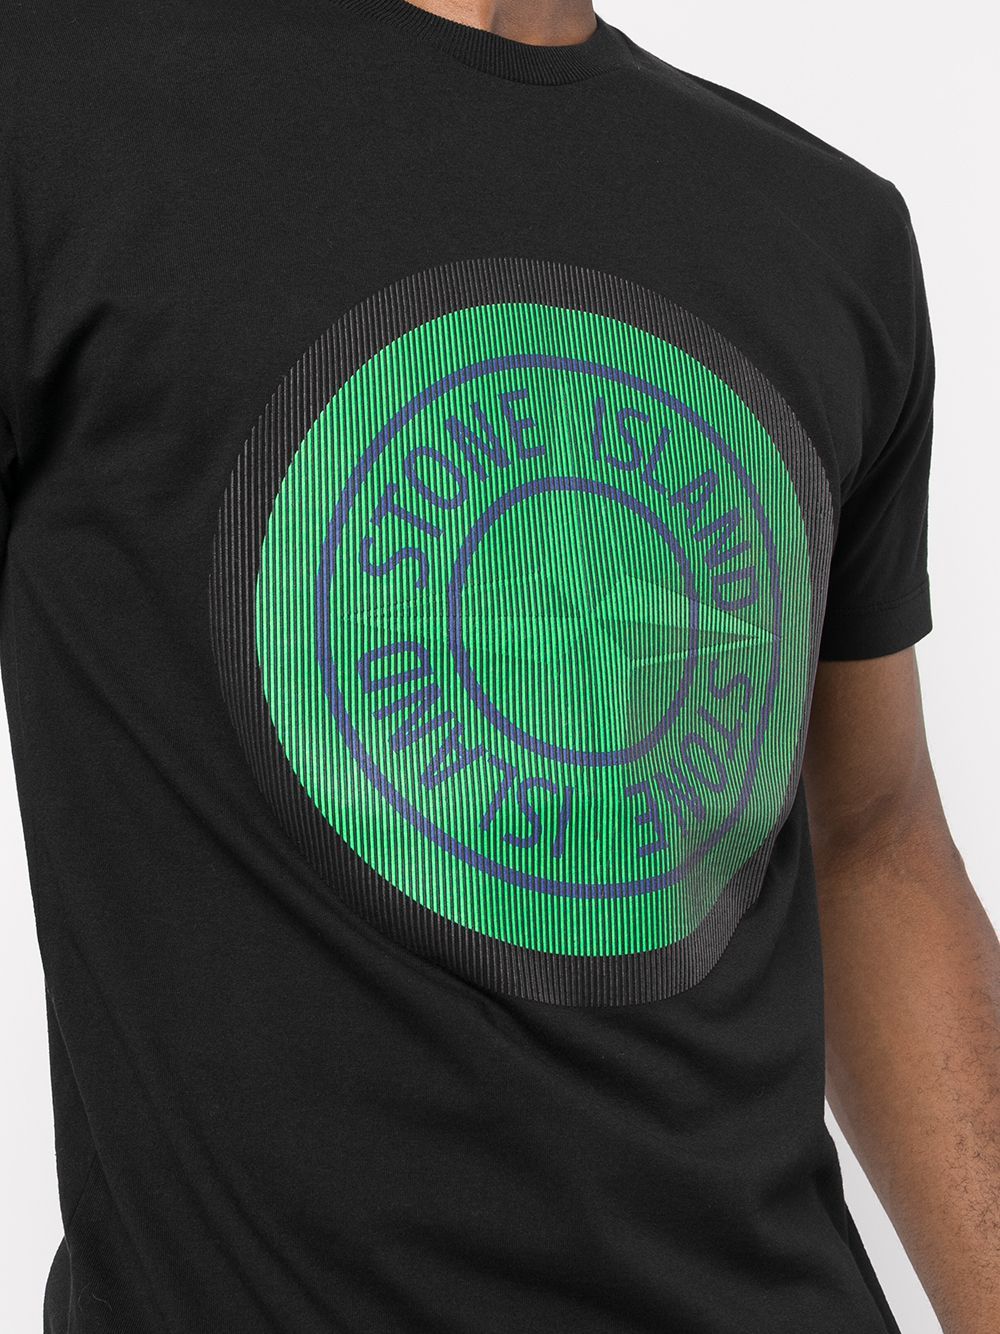 STONE ISLAND Logo Print T-Shirt Black - MAISONDEFASHION.COM